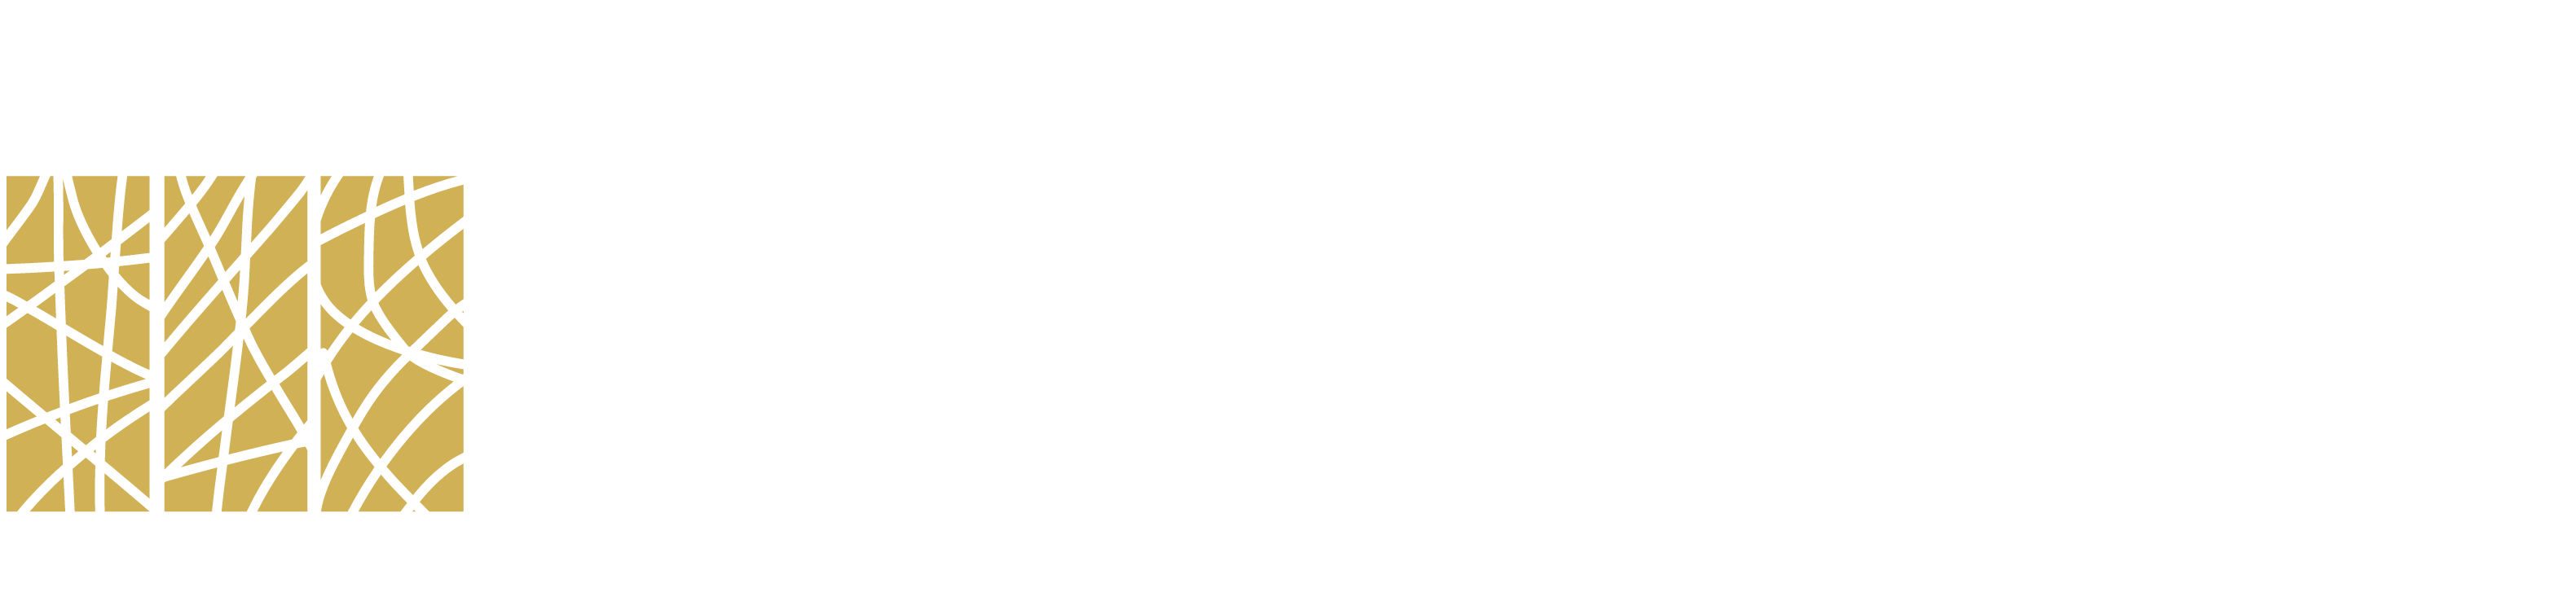 Black Wall Design Company LLC.